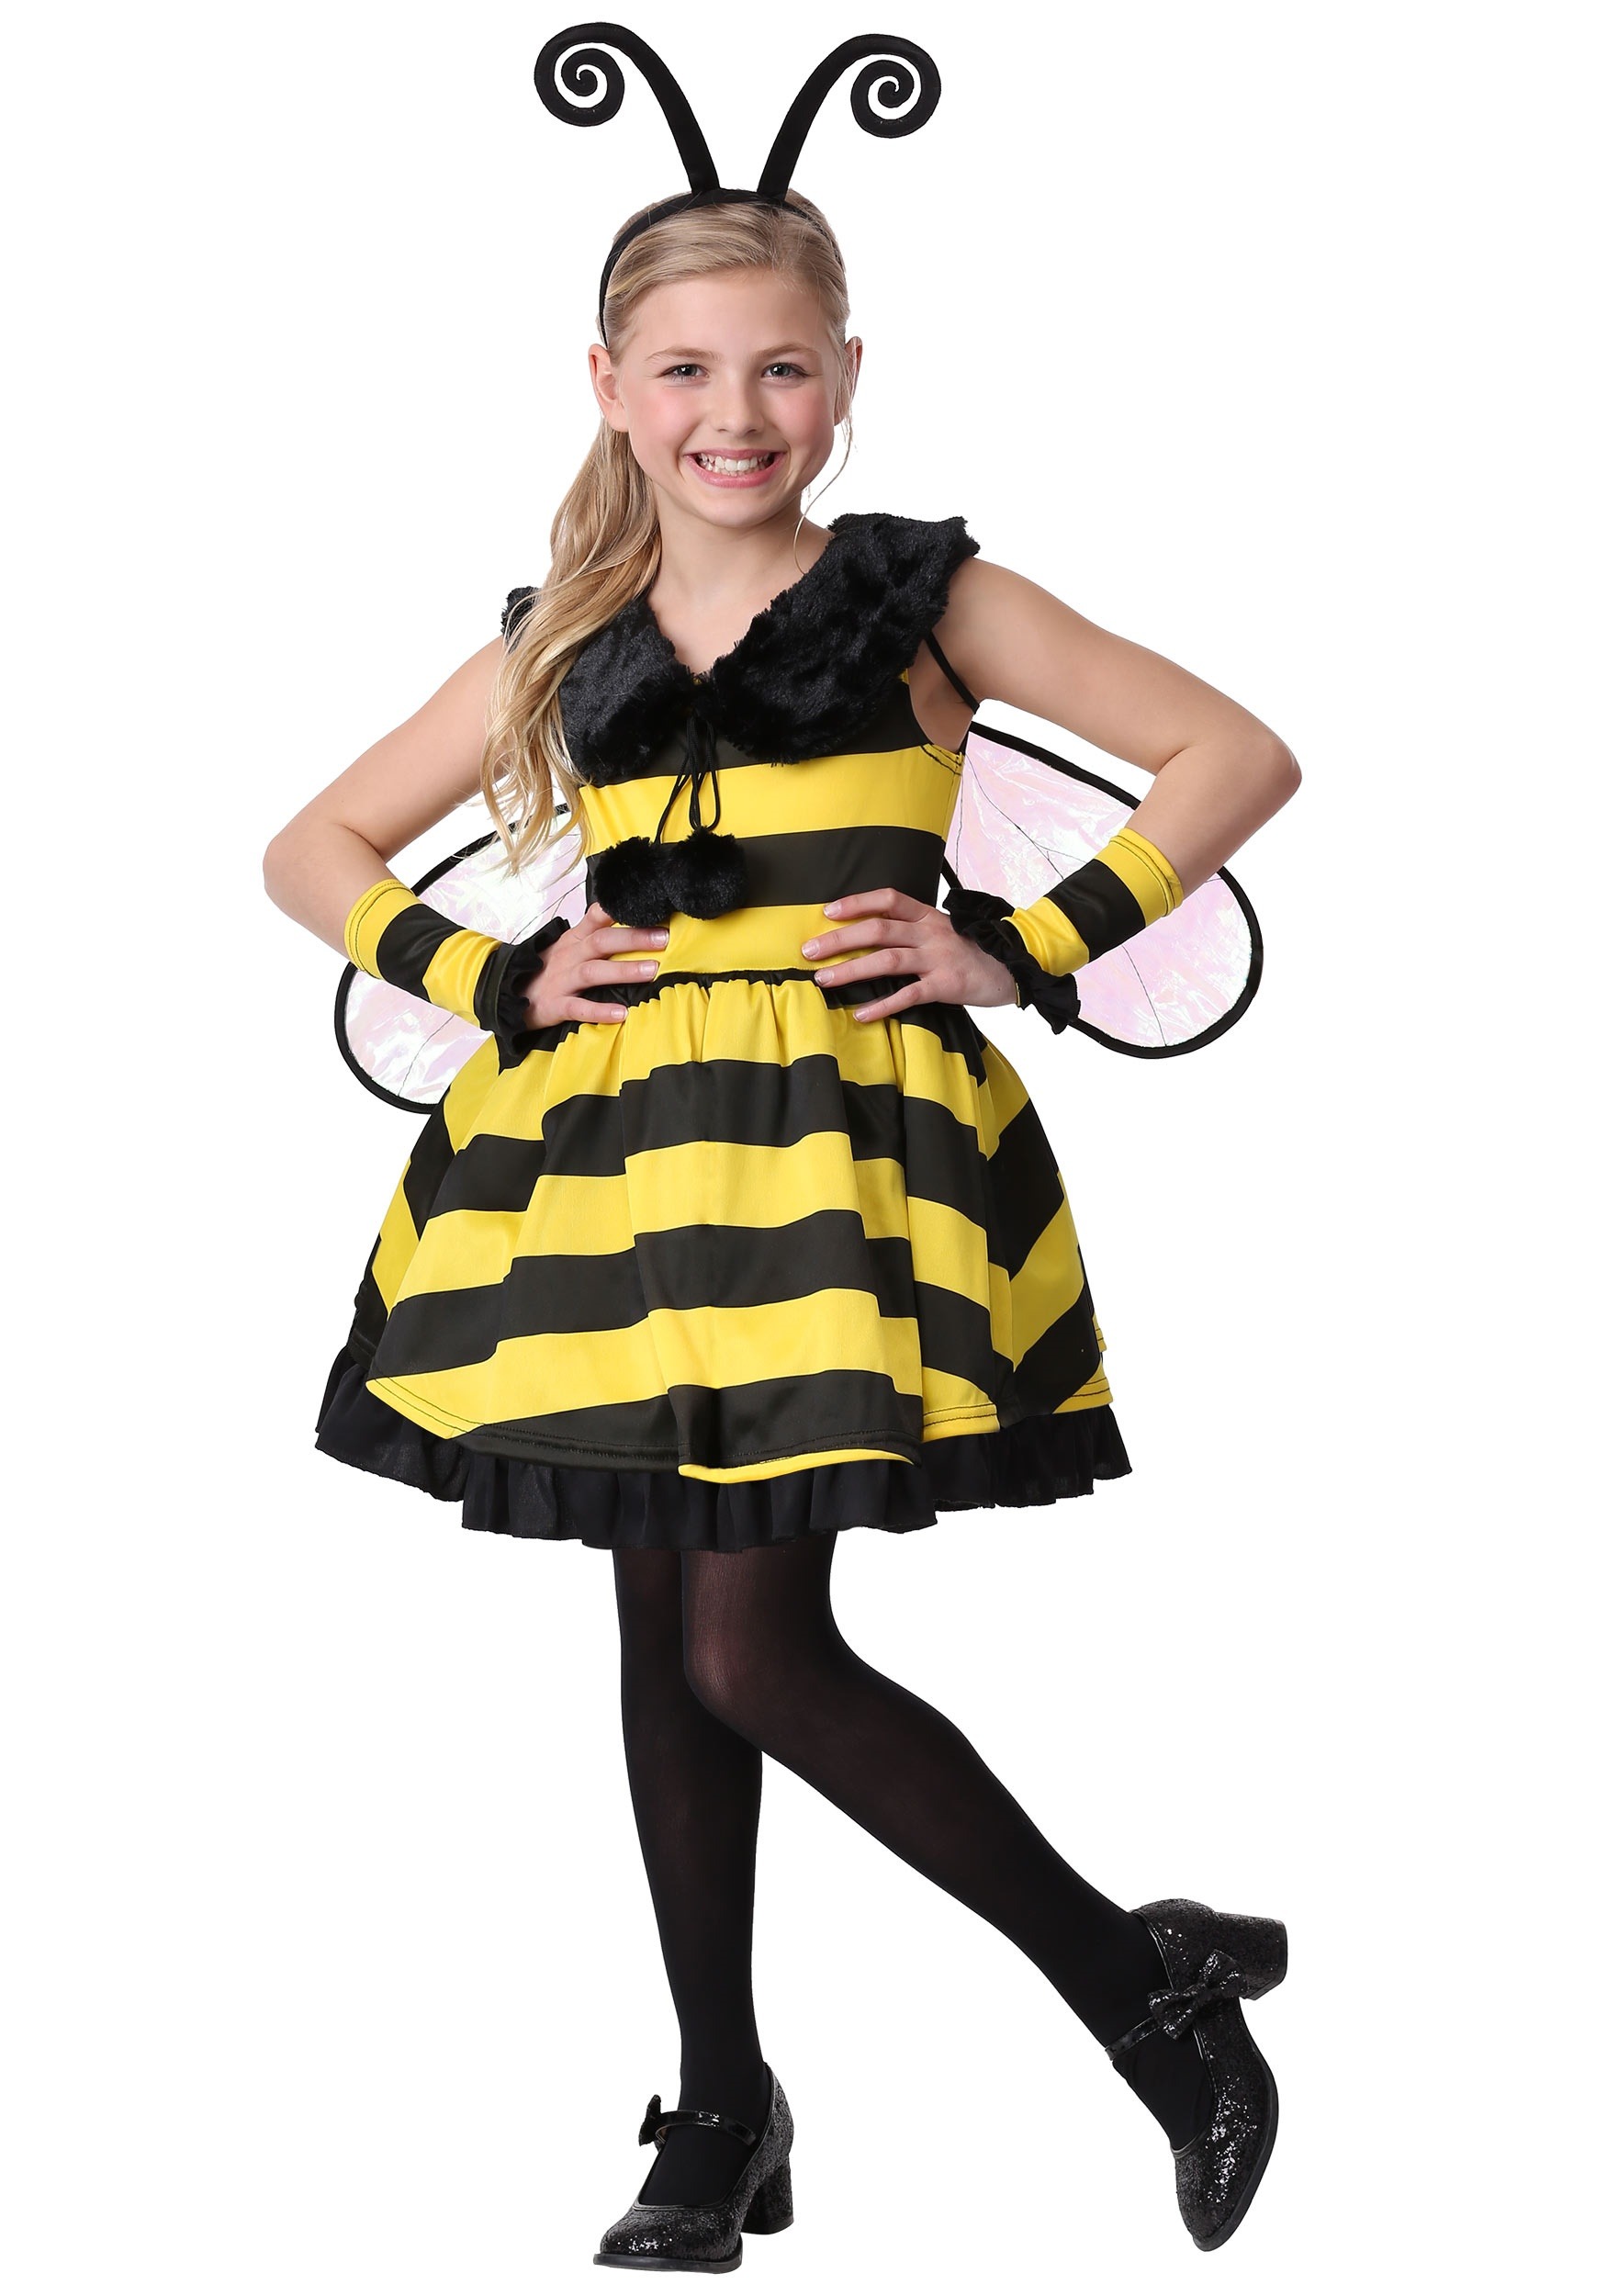 Photos - Fancy Dress Deluxe FUN Costumes Girl's  Bumble Bee Costume Dress Black/Yellow FUN04 